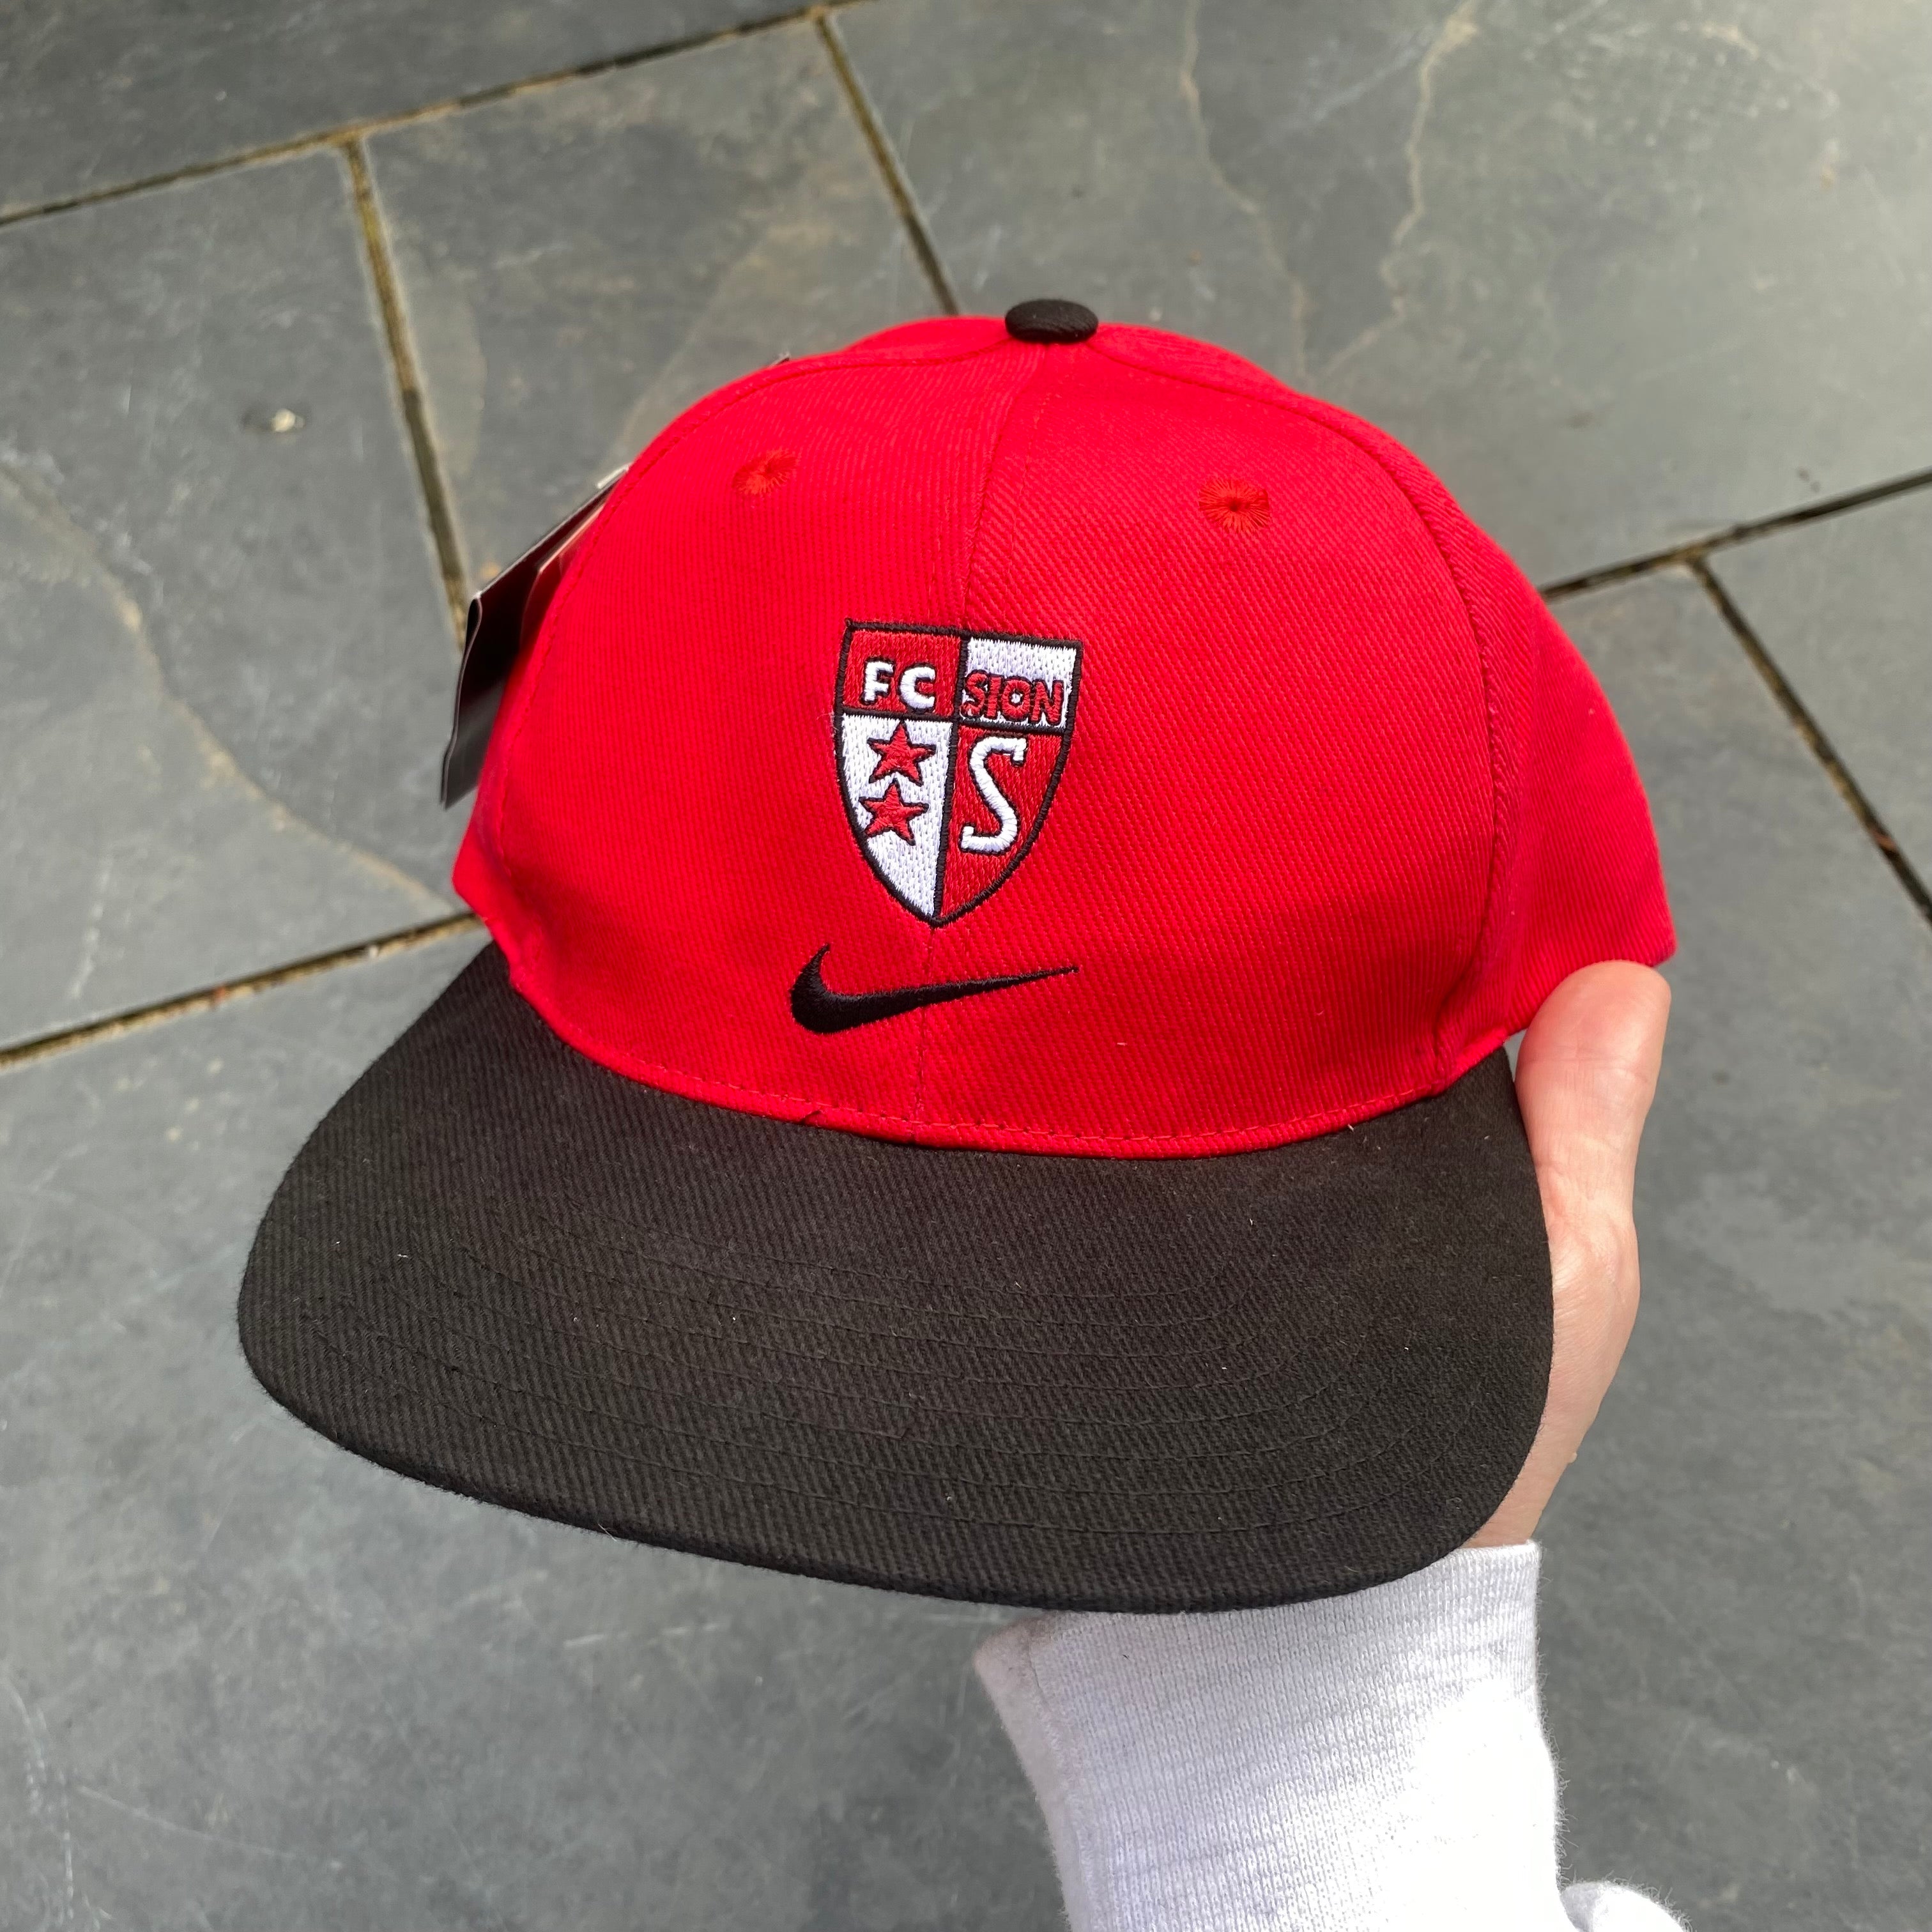 Vintage Nike FC Sion Hat Cap Red